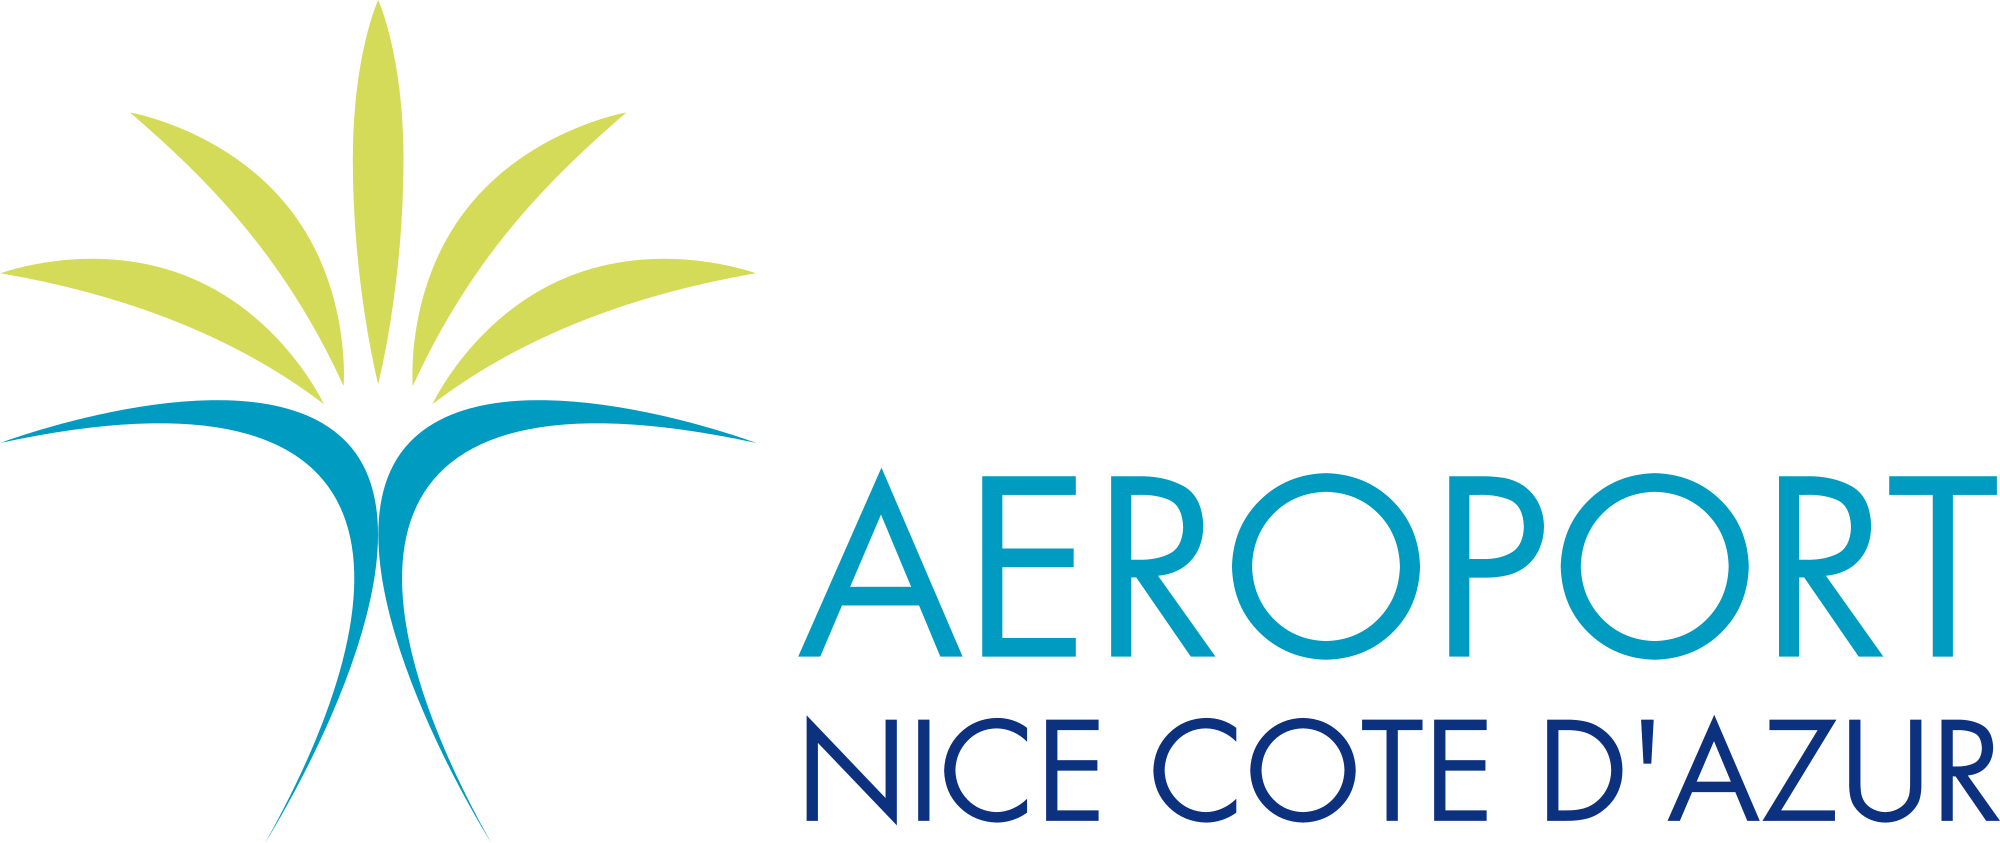 Nice Logo - File:Aeroport Nice Cote d'Azur logo.svg - Wikimedia Commons